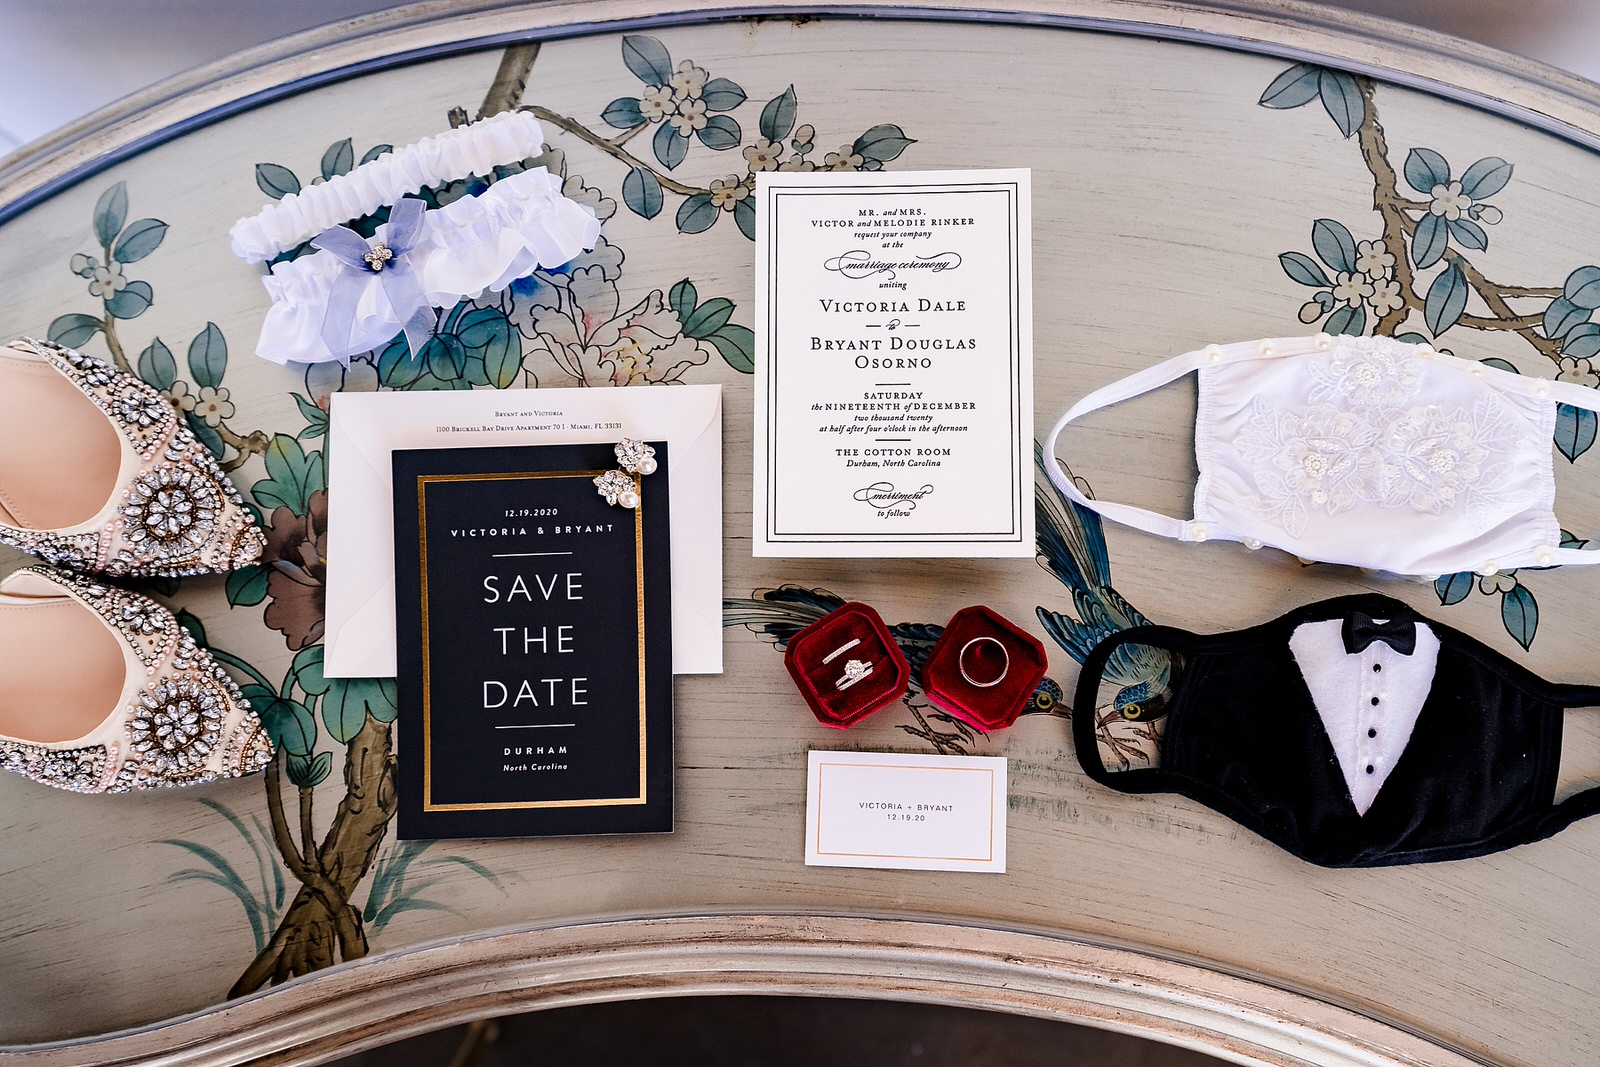 Wedding details for a Covid wedding include custom bride and groom masks